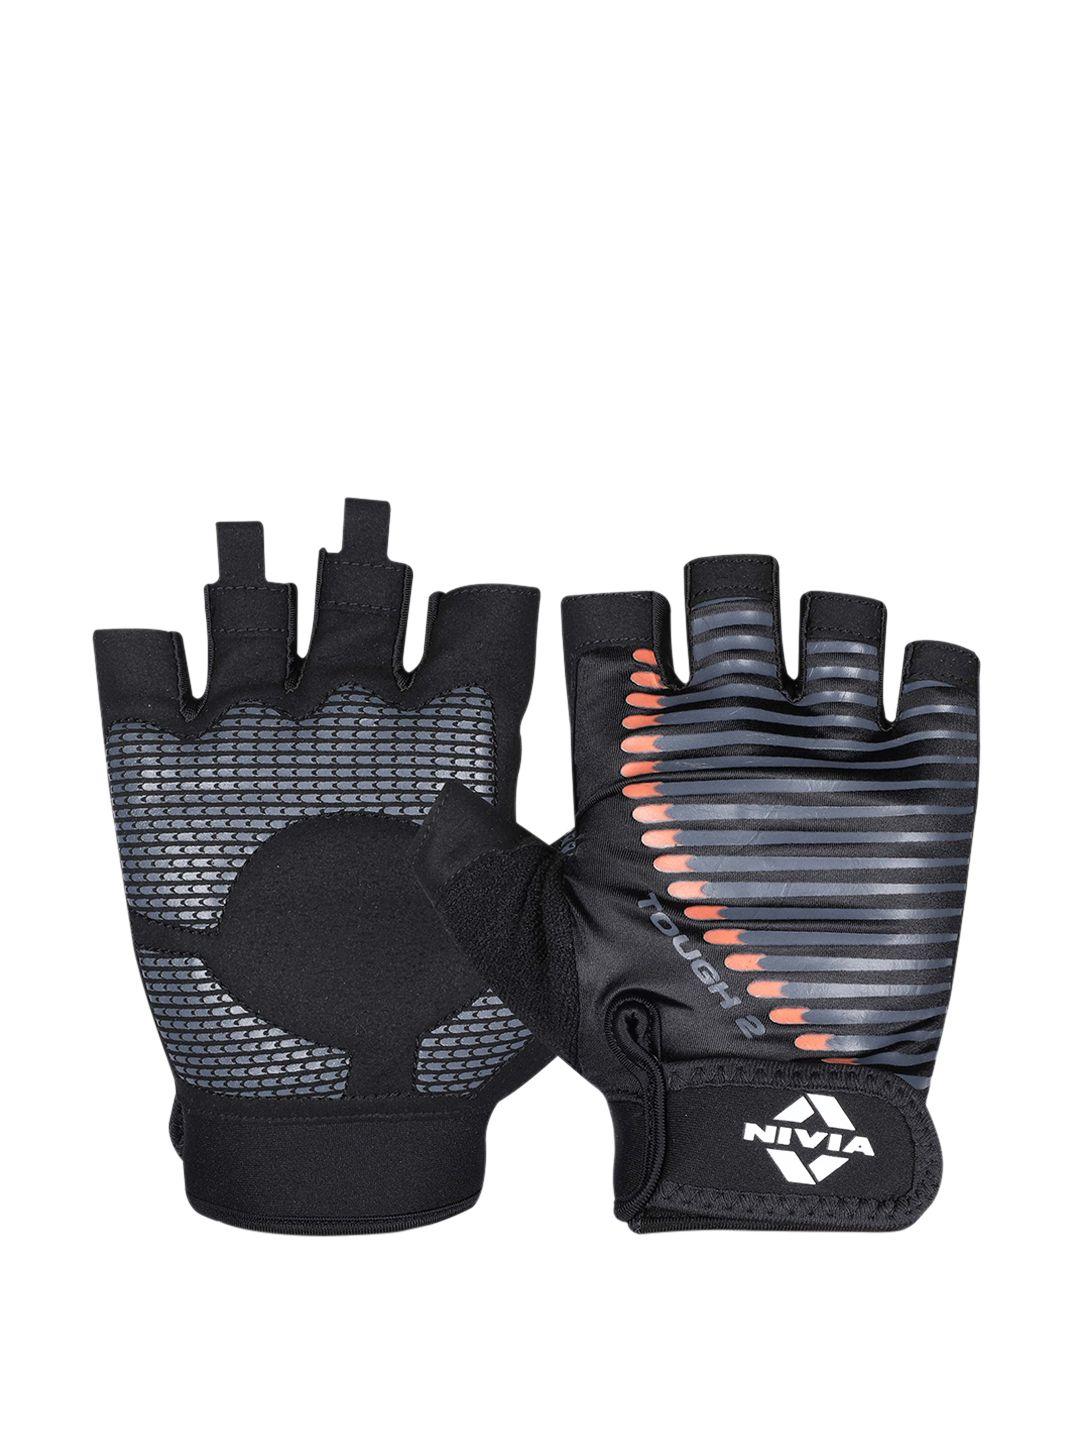 nivia unisex black & orange cross training gloves